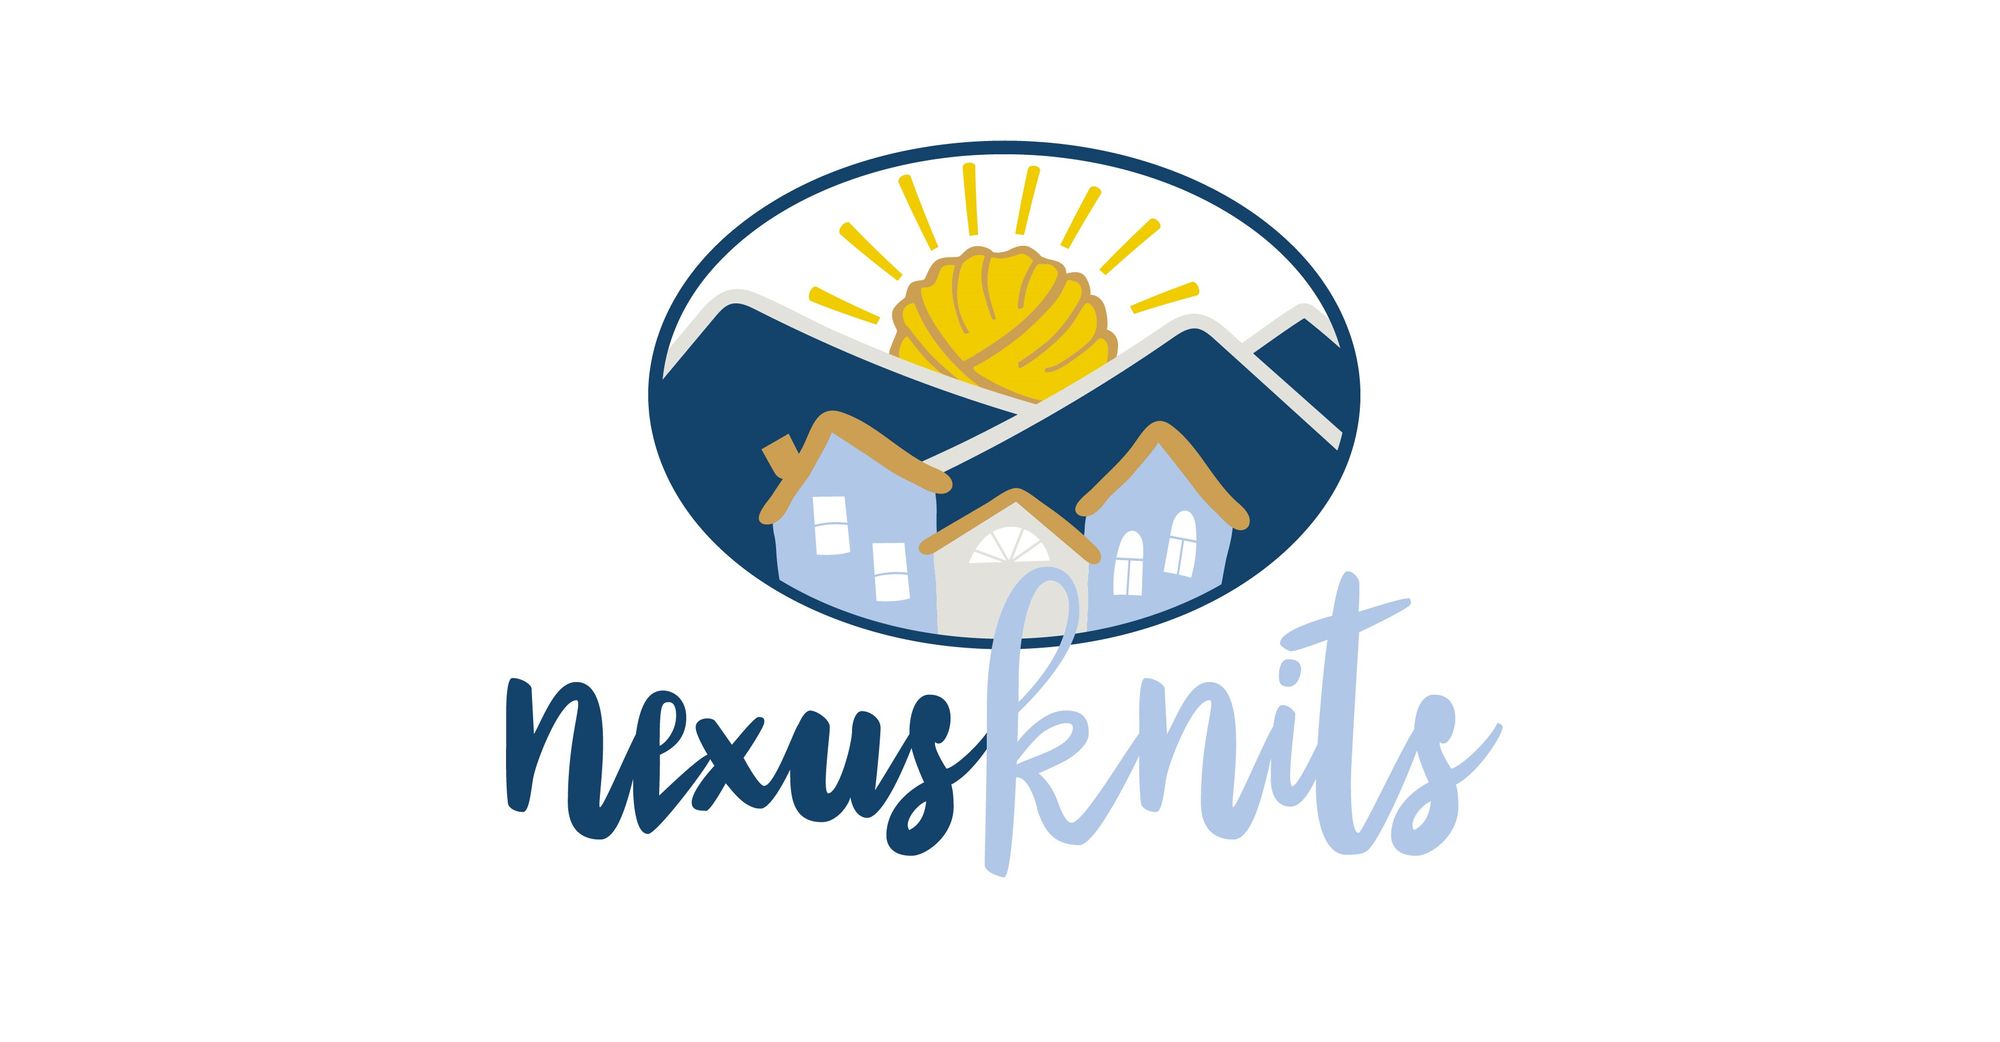 Making Connections Through Handmade Craft Items - Nexusknits